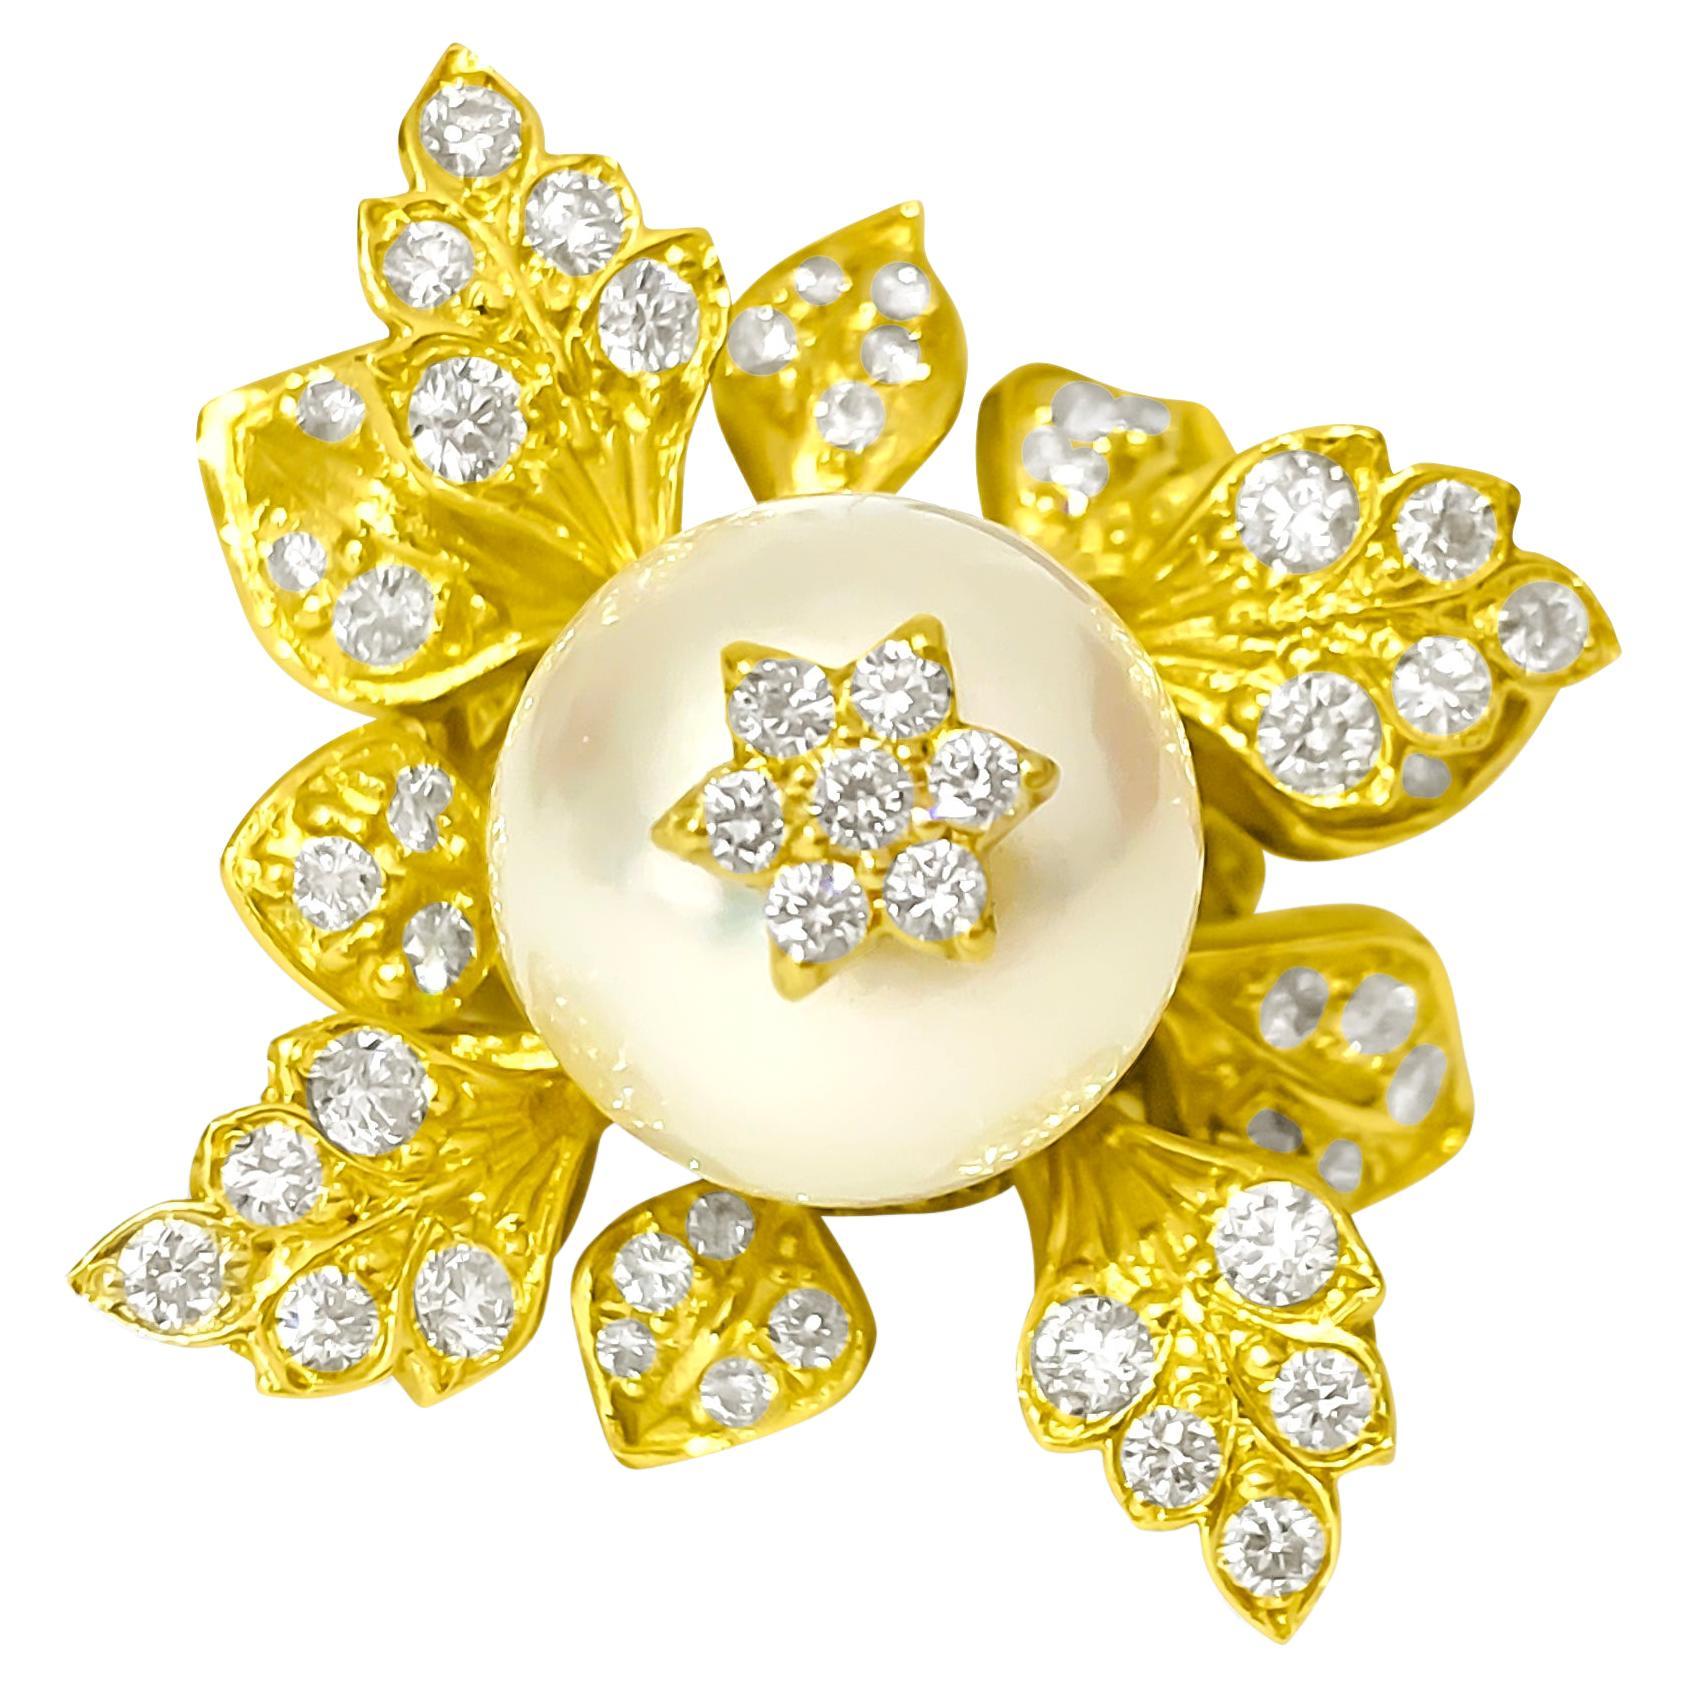 Bague en or 18k avec motif de feuilles en perles naturelles et diamants de 20ct